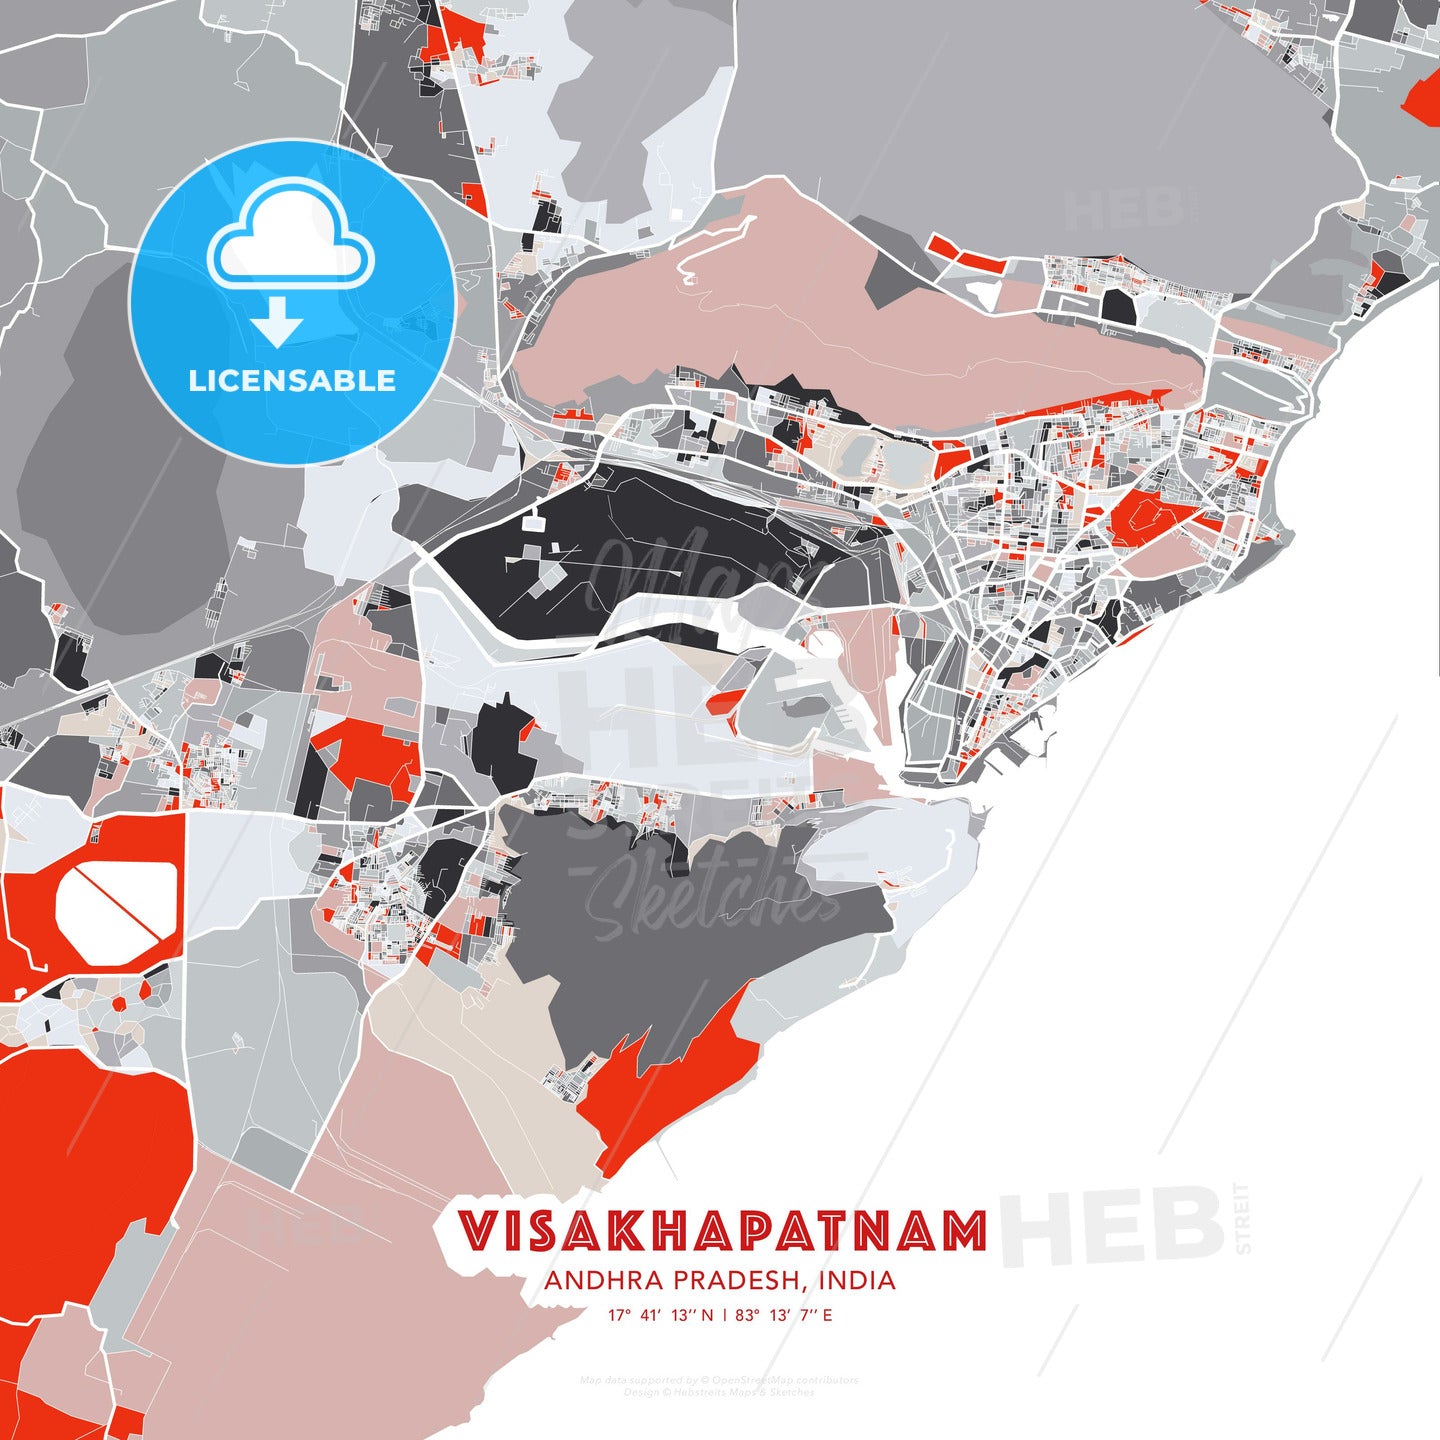 Visakhapatnam, Andhra Pradesh, India, modern map - HEBSTREITS Sketches